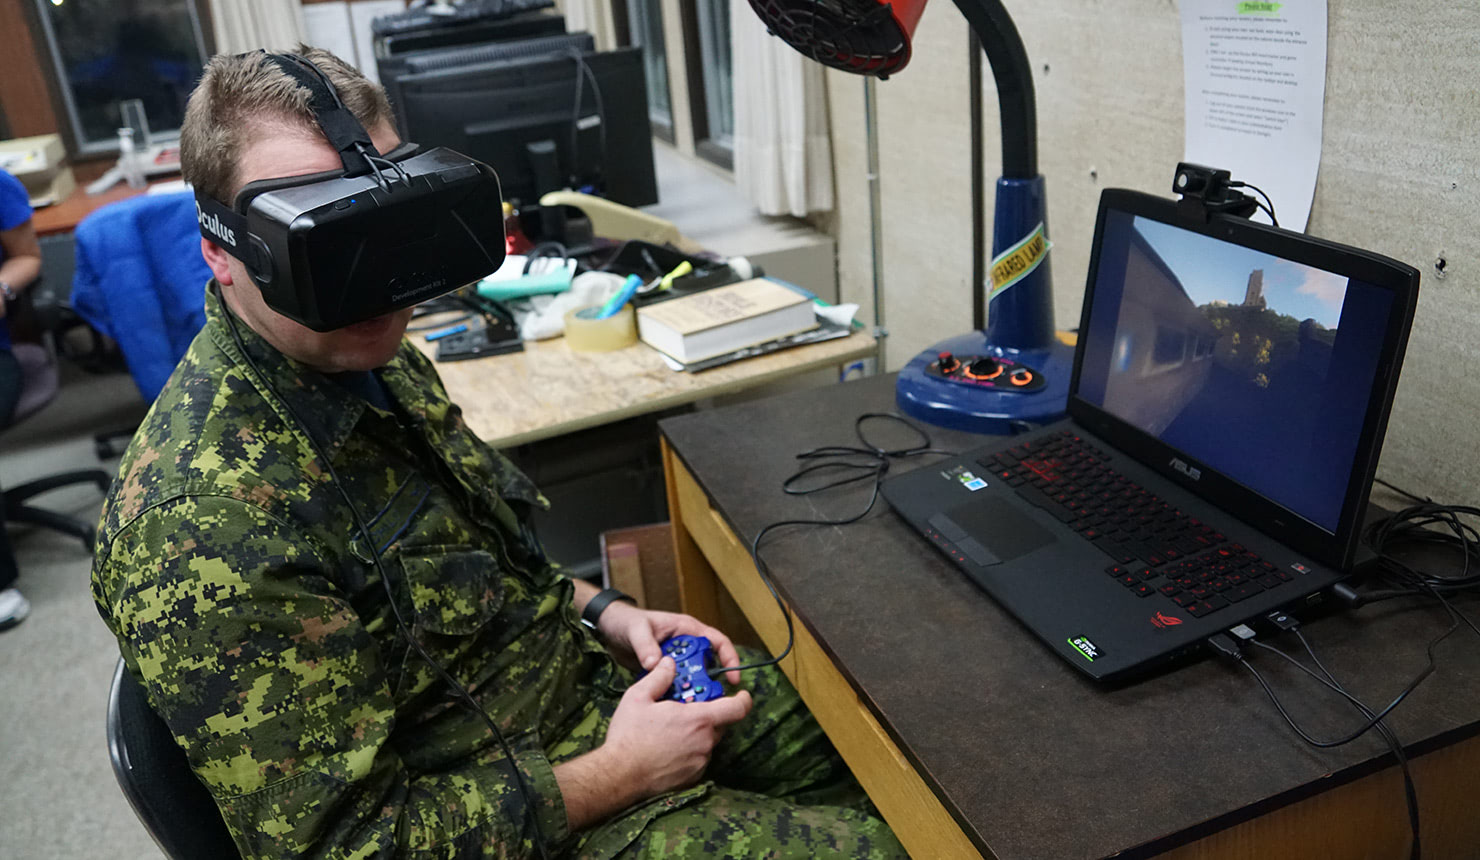 Virtual reality tech